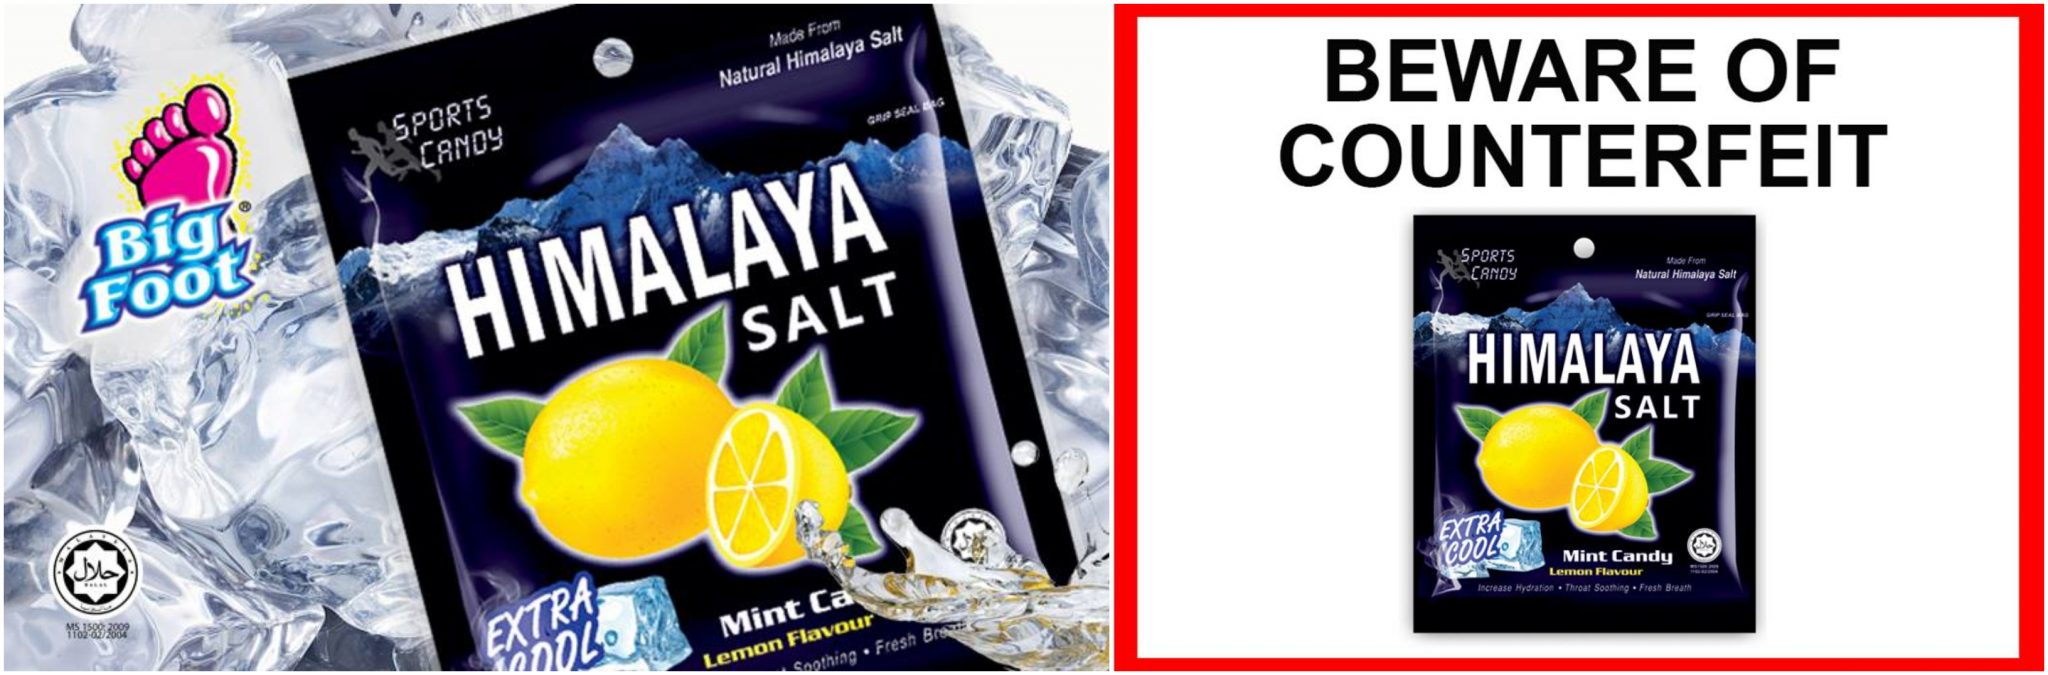 https://www.intradco.com.au/wp-content/uploads/2020/07/Big-Foot-Himalaya-Salt-Candy.png